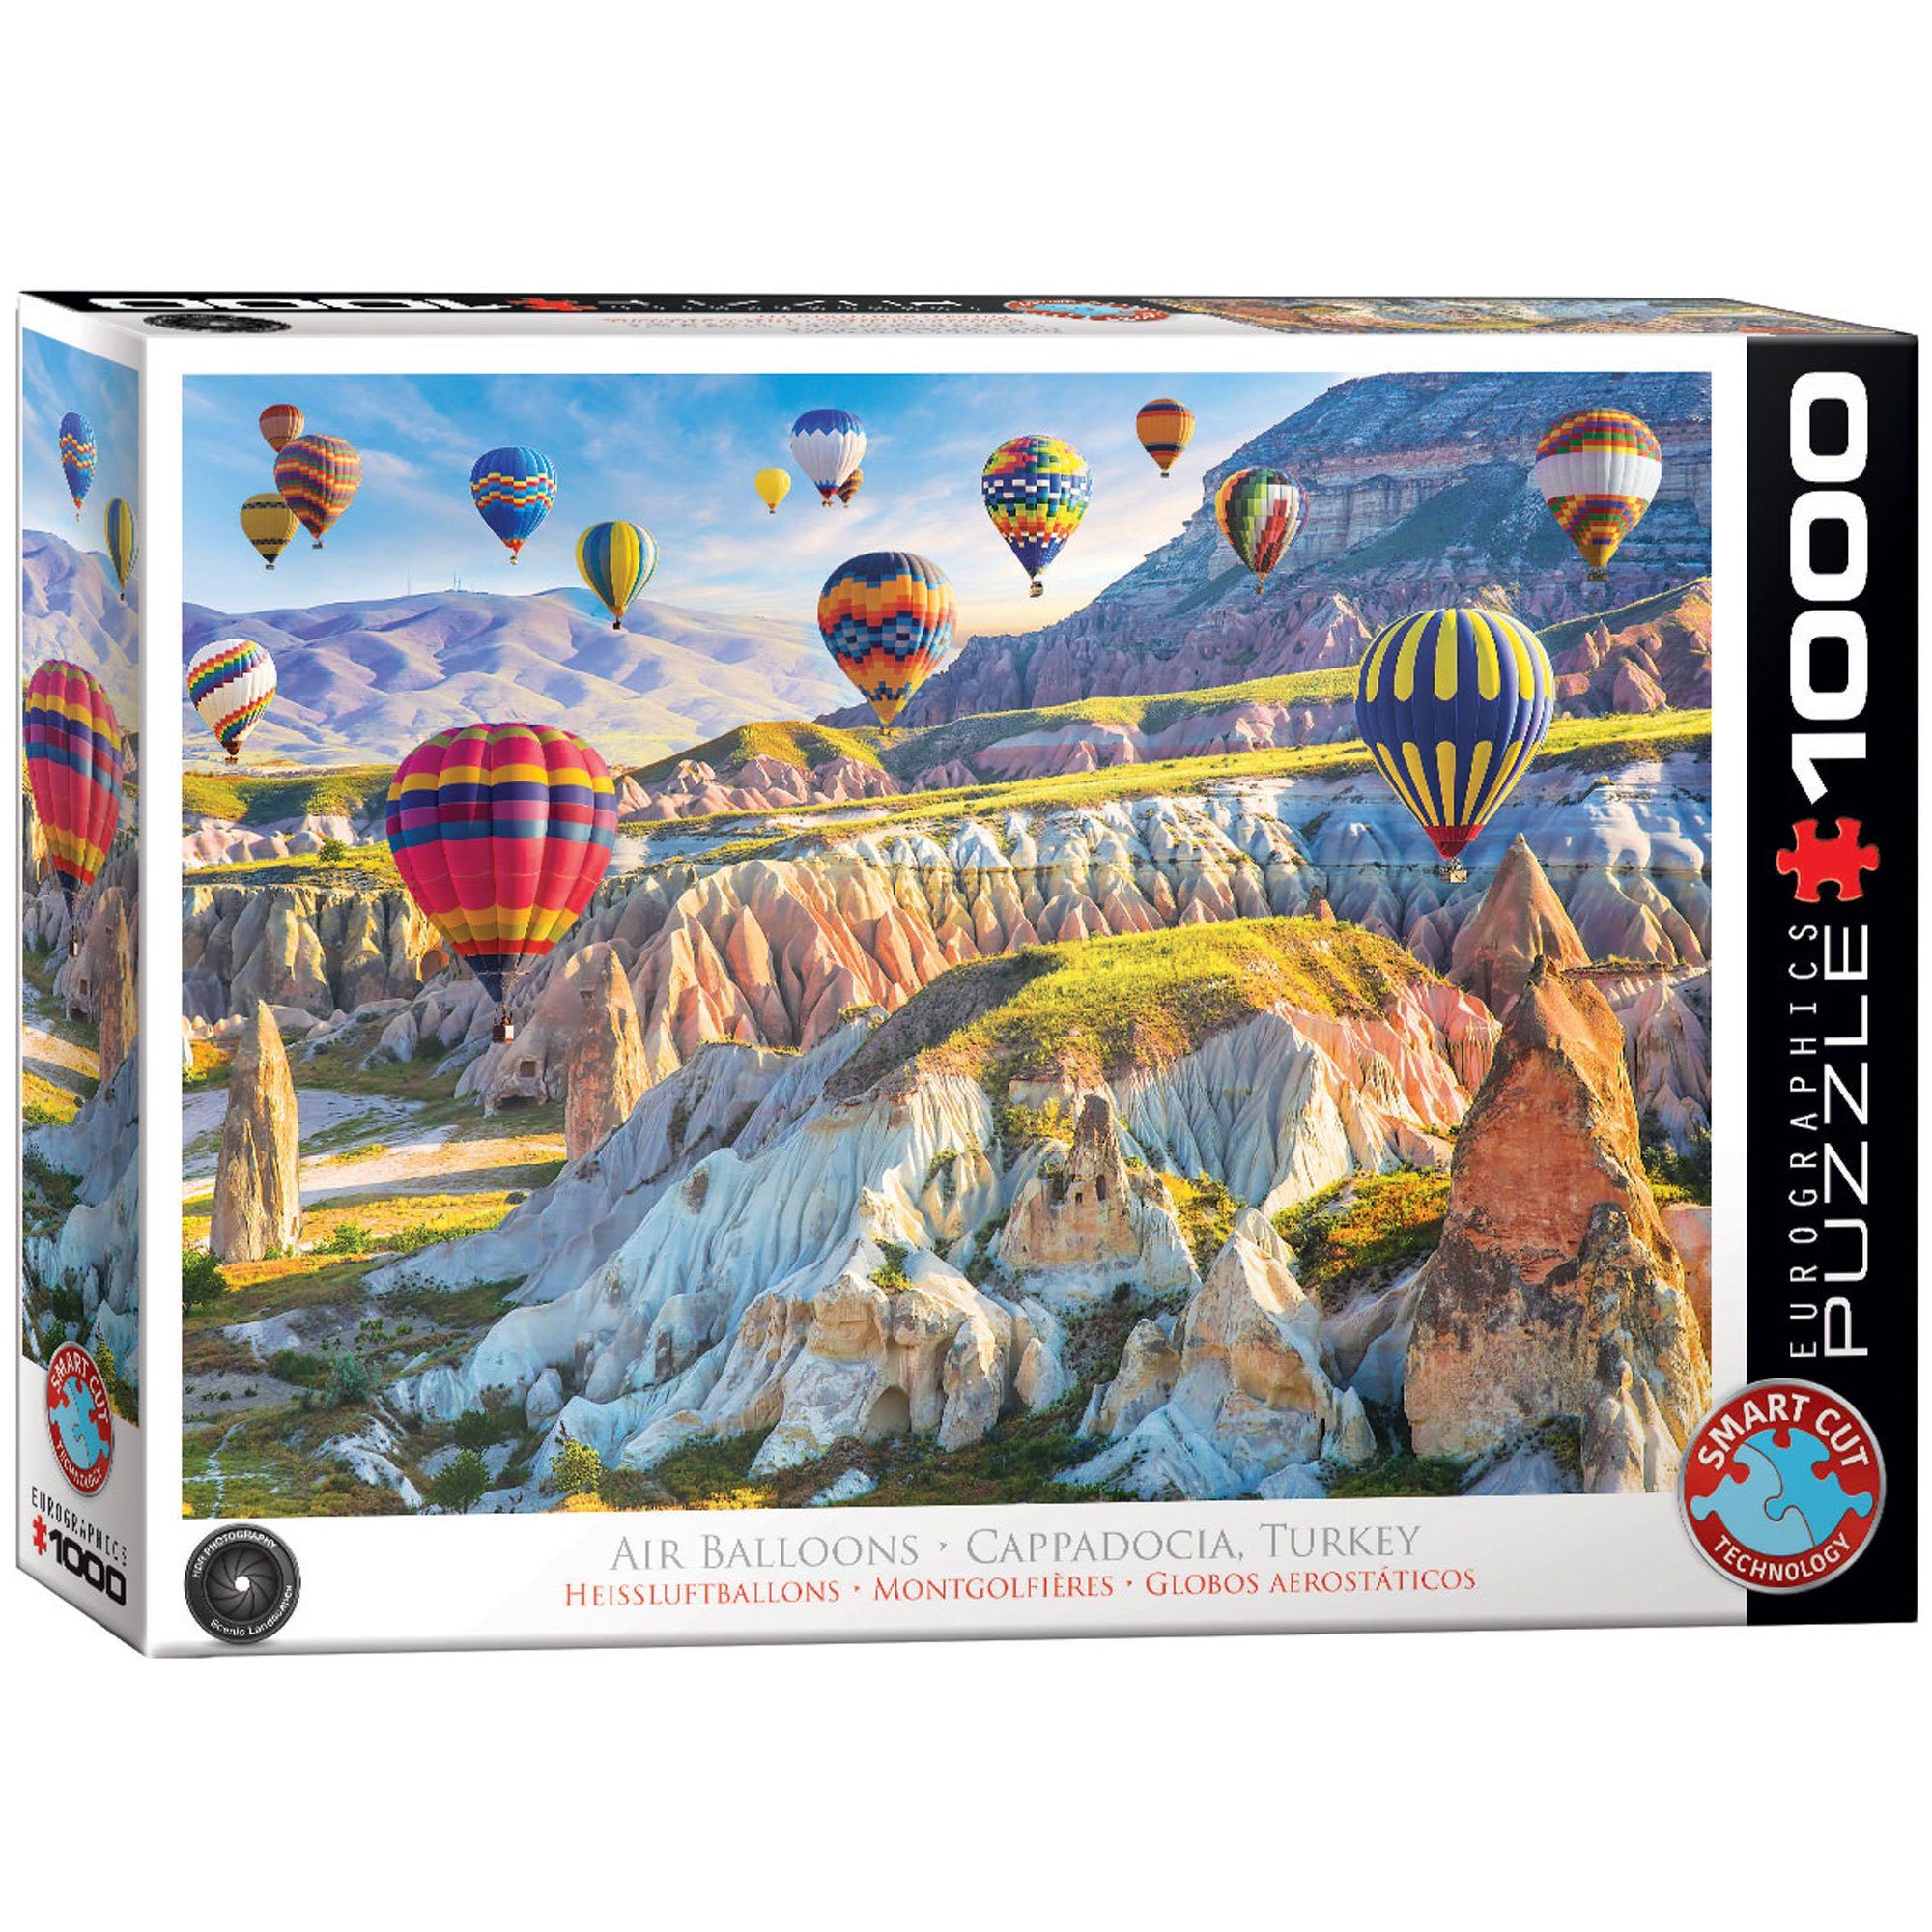 empireposter Puzzle Türkei - Capadoccia Heißfluftballons - 1000 Teile Puzzle 68x48 cm, Puzzleteile